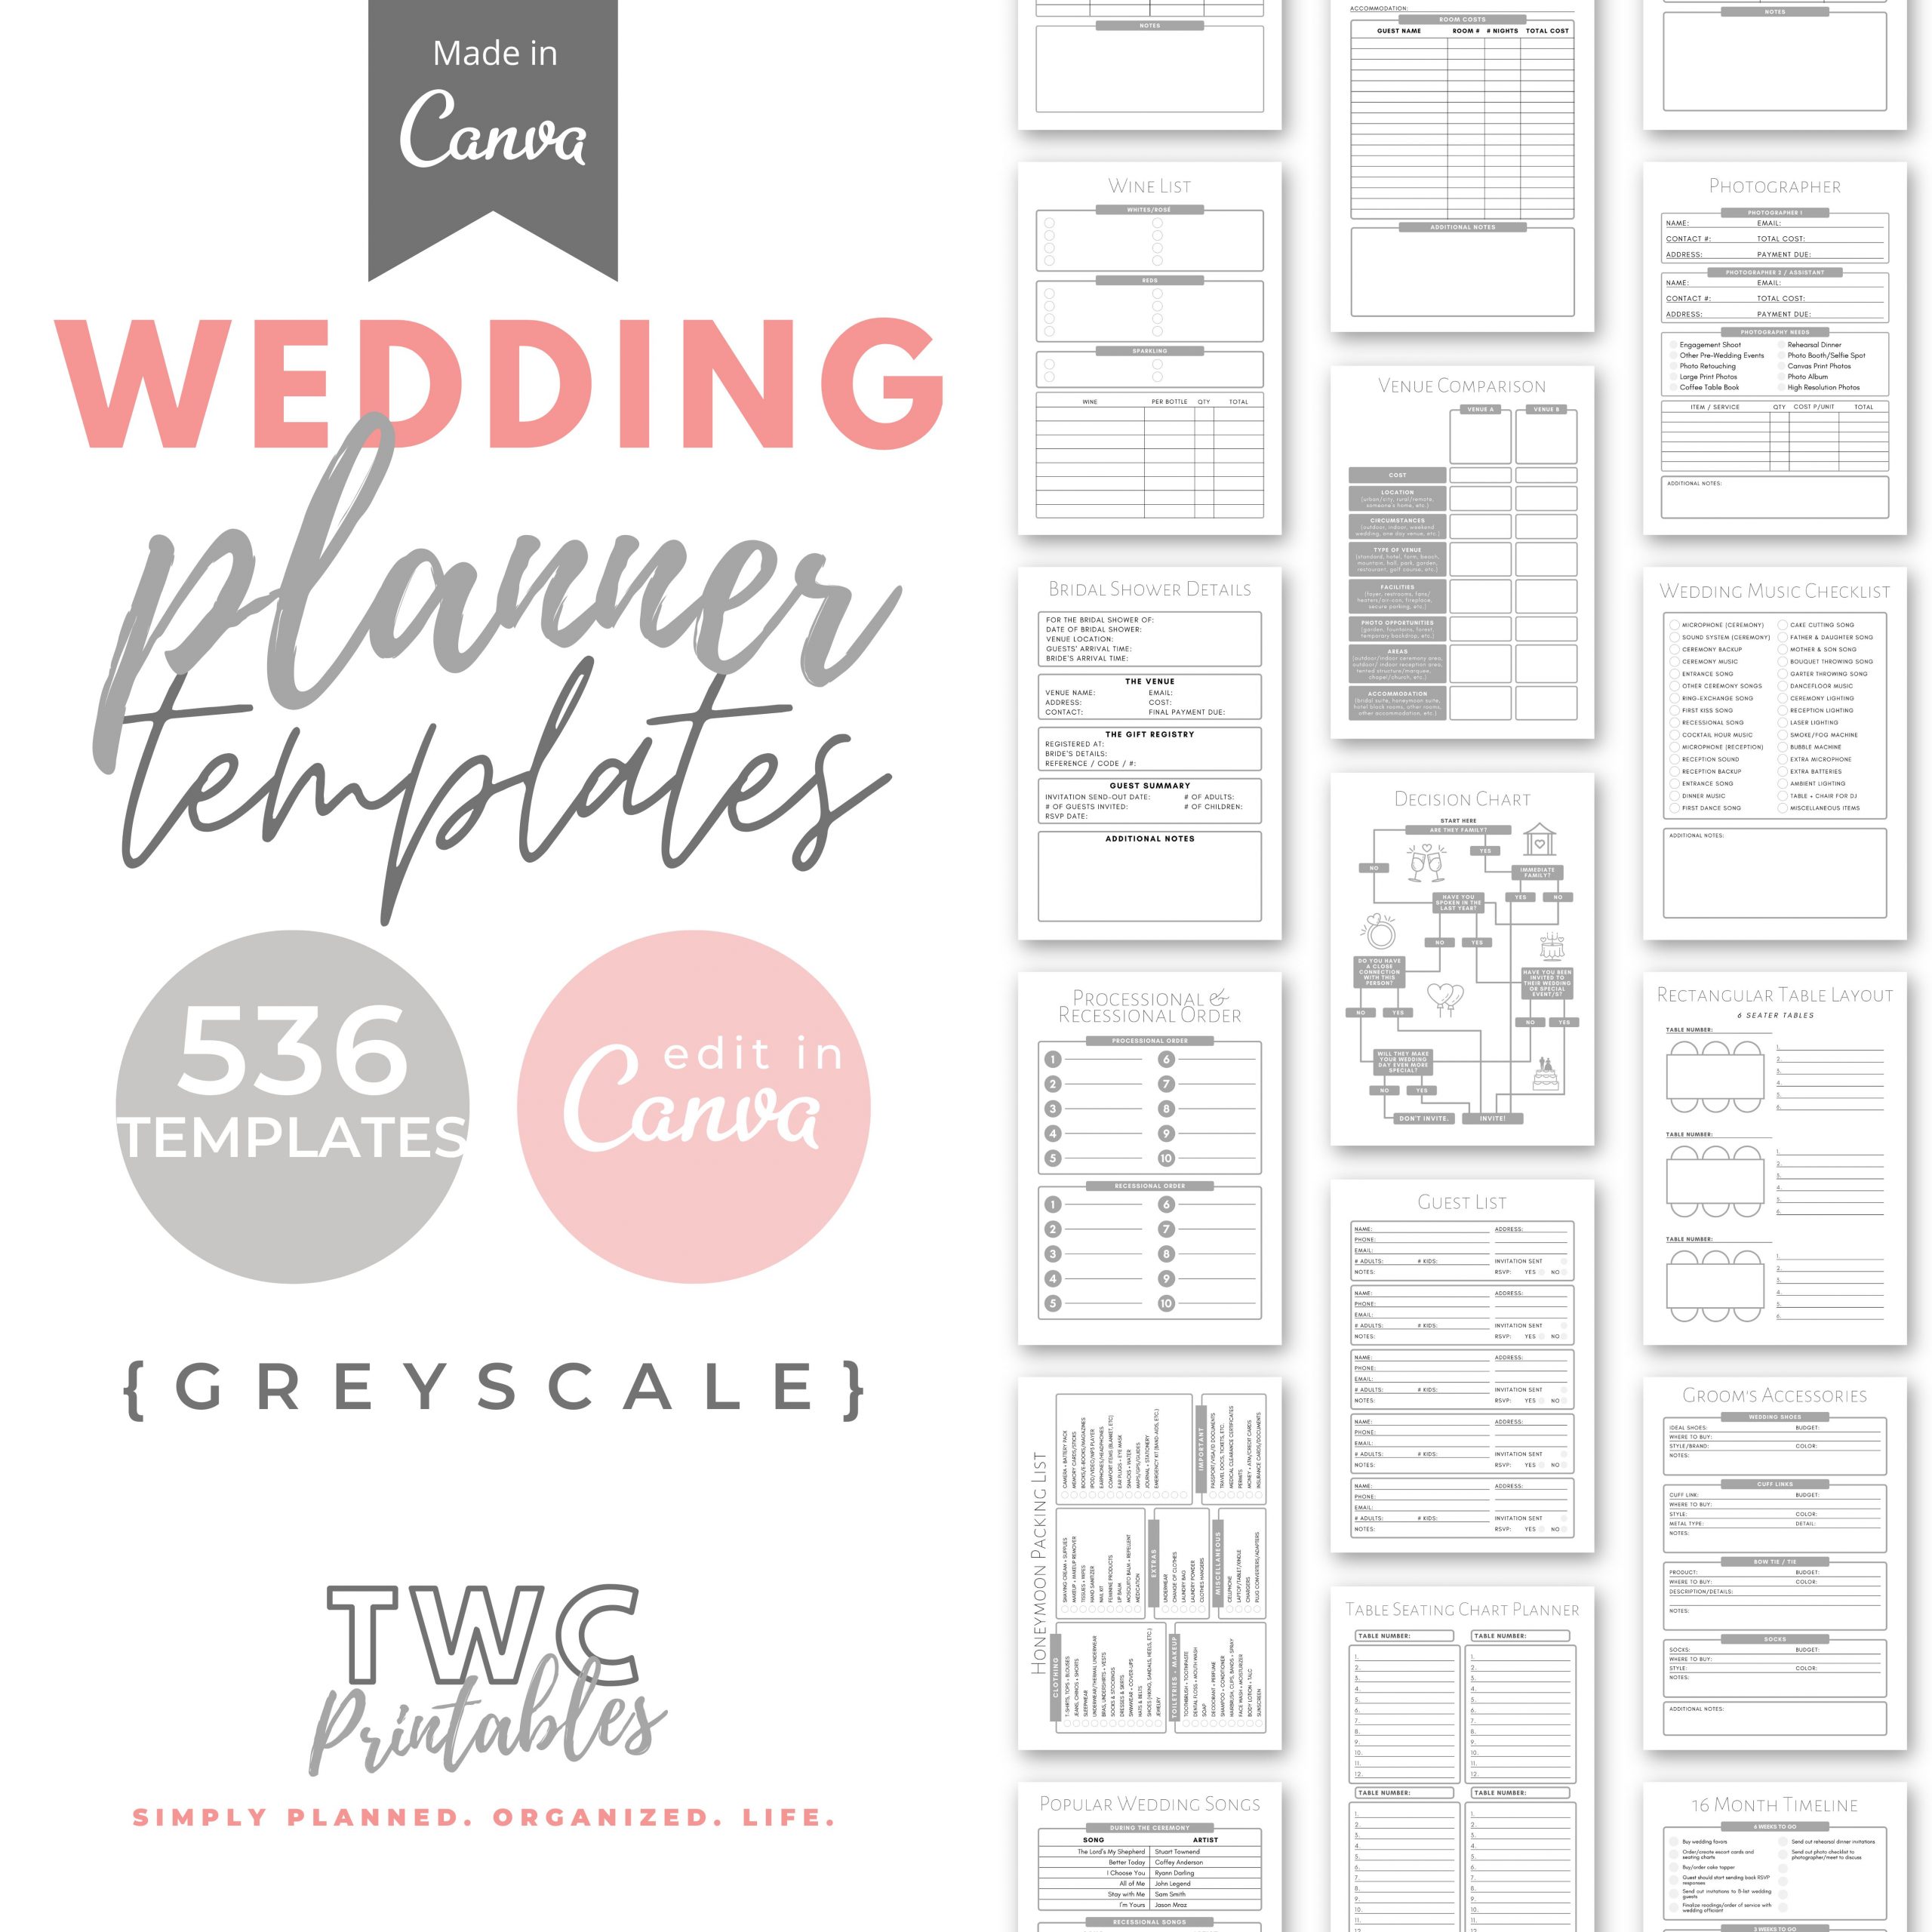 Editable Wedding Planner Templates for Canva, wedding planner binder, wedding binder template, wedding planner and organizer, canva wedding